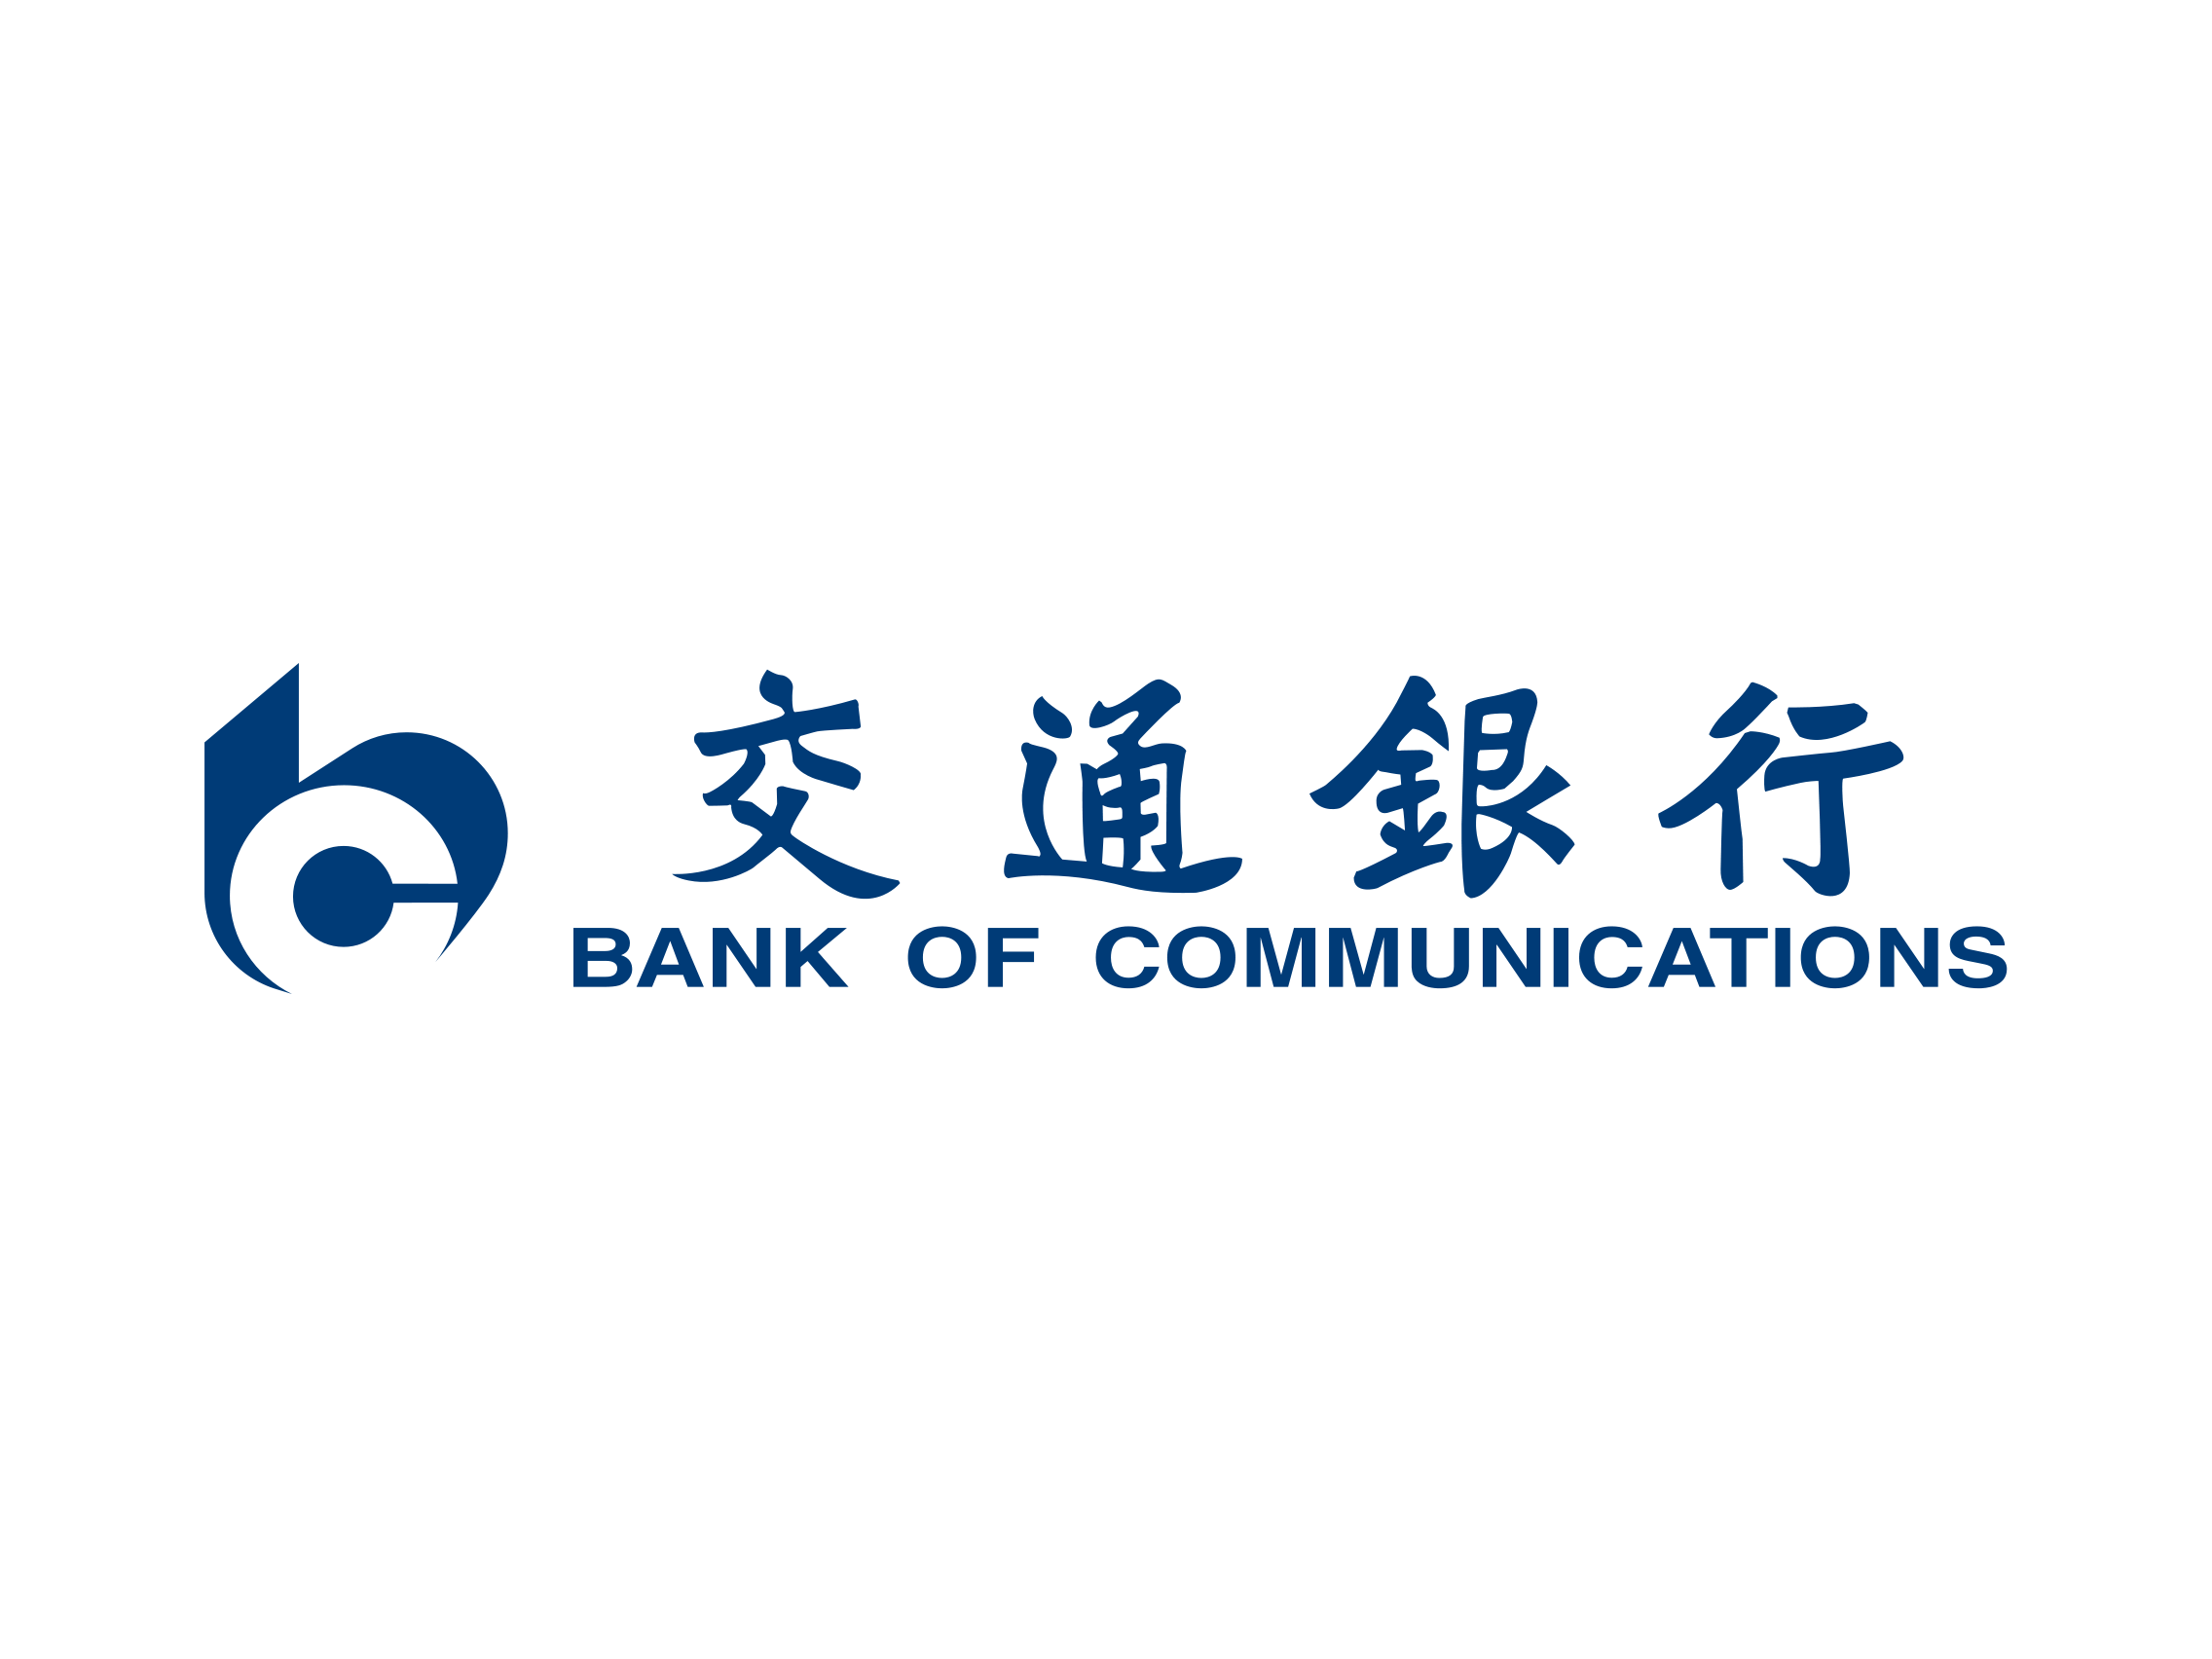 Comm Logo - Bank of Communications logo logotype